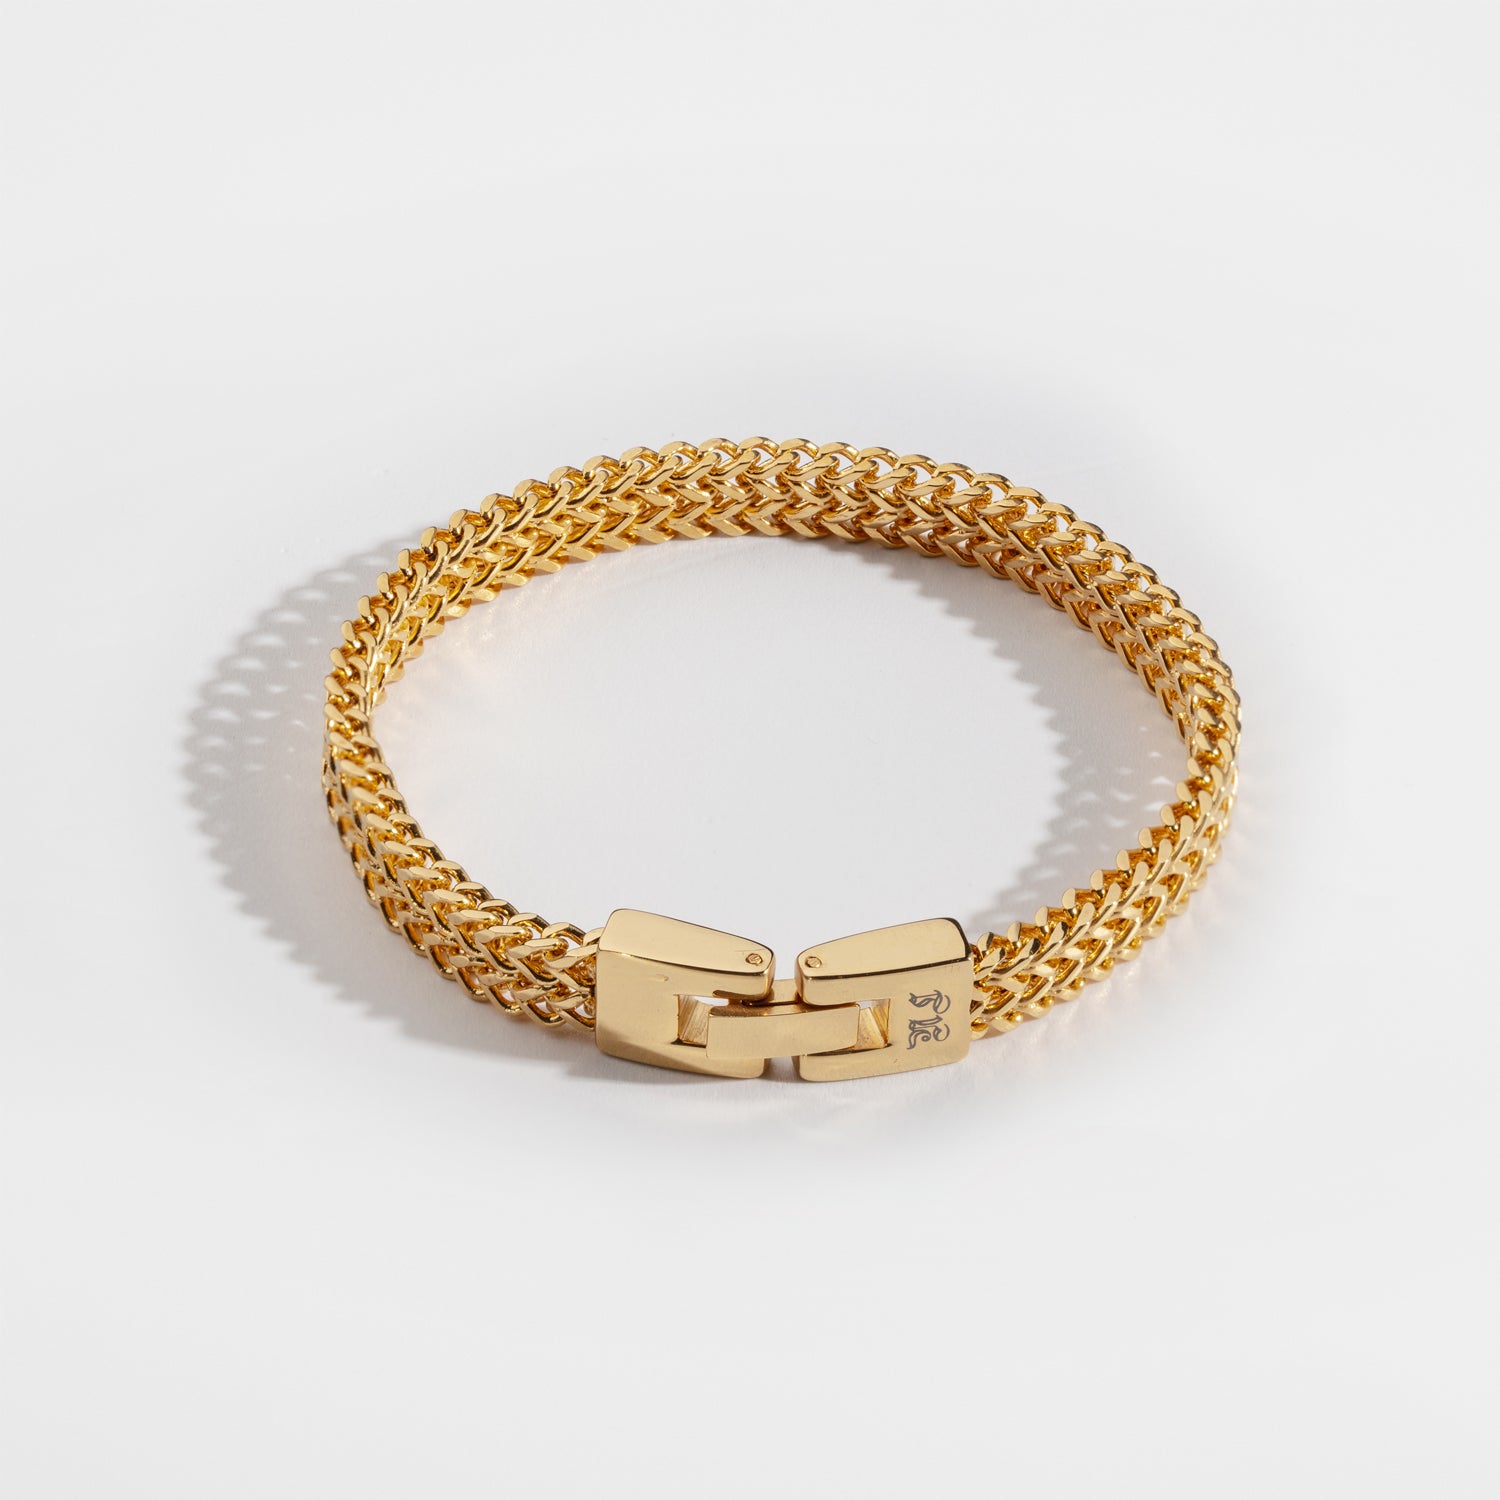 NL Fehu bracelet - Gold-toned